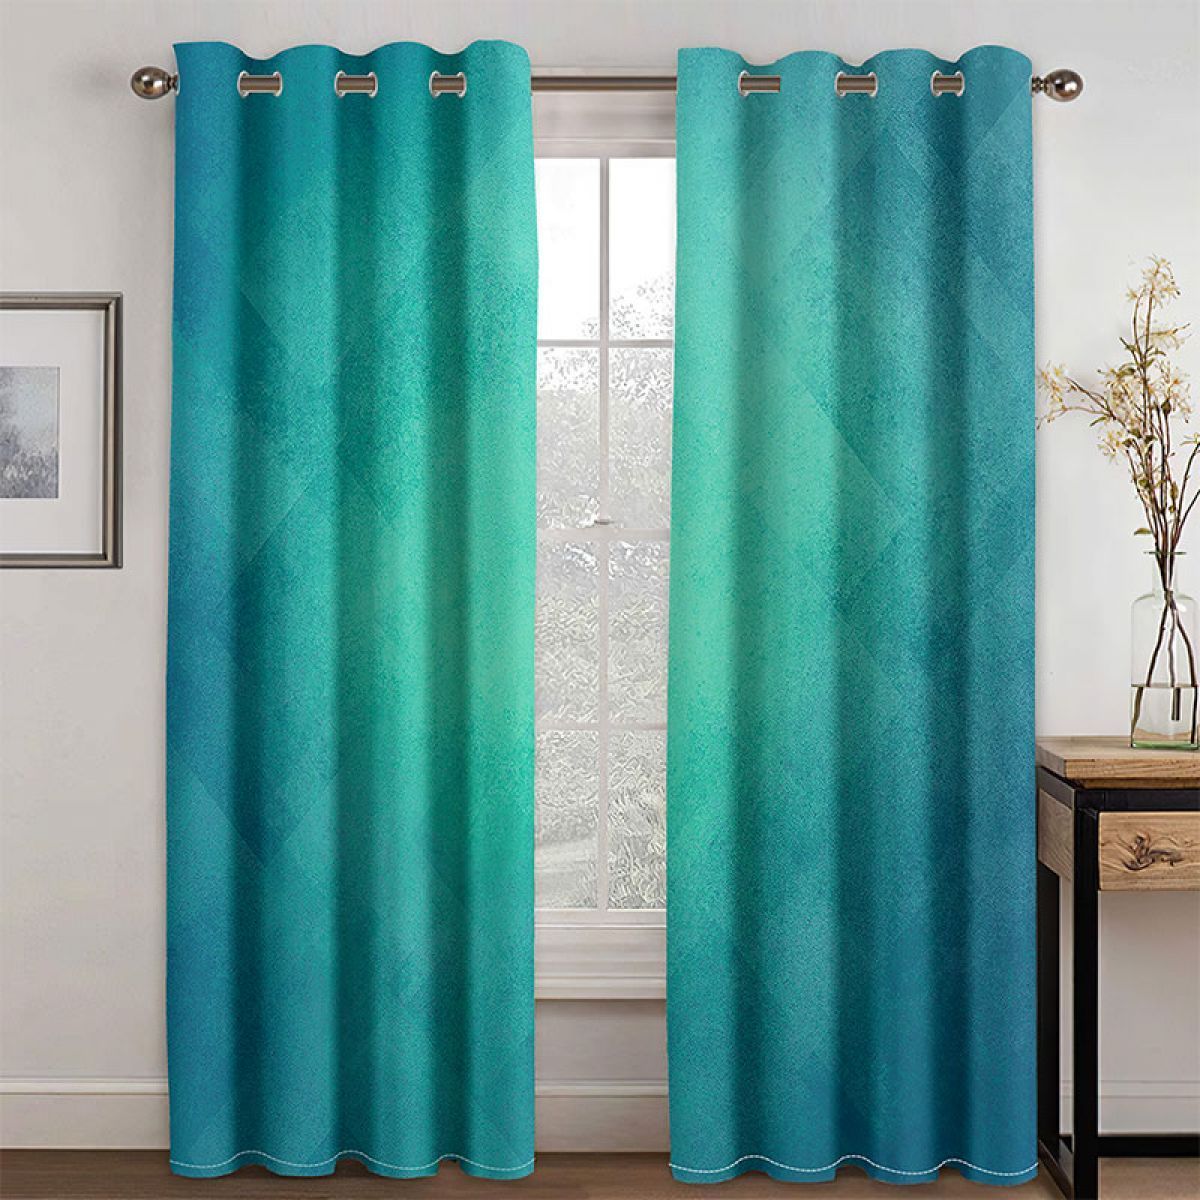 3d gradient printed window curtain home decor 6243